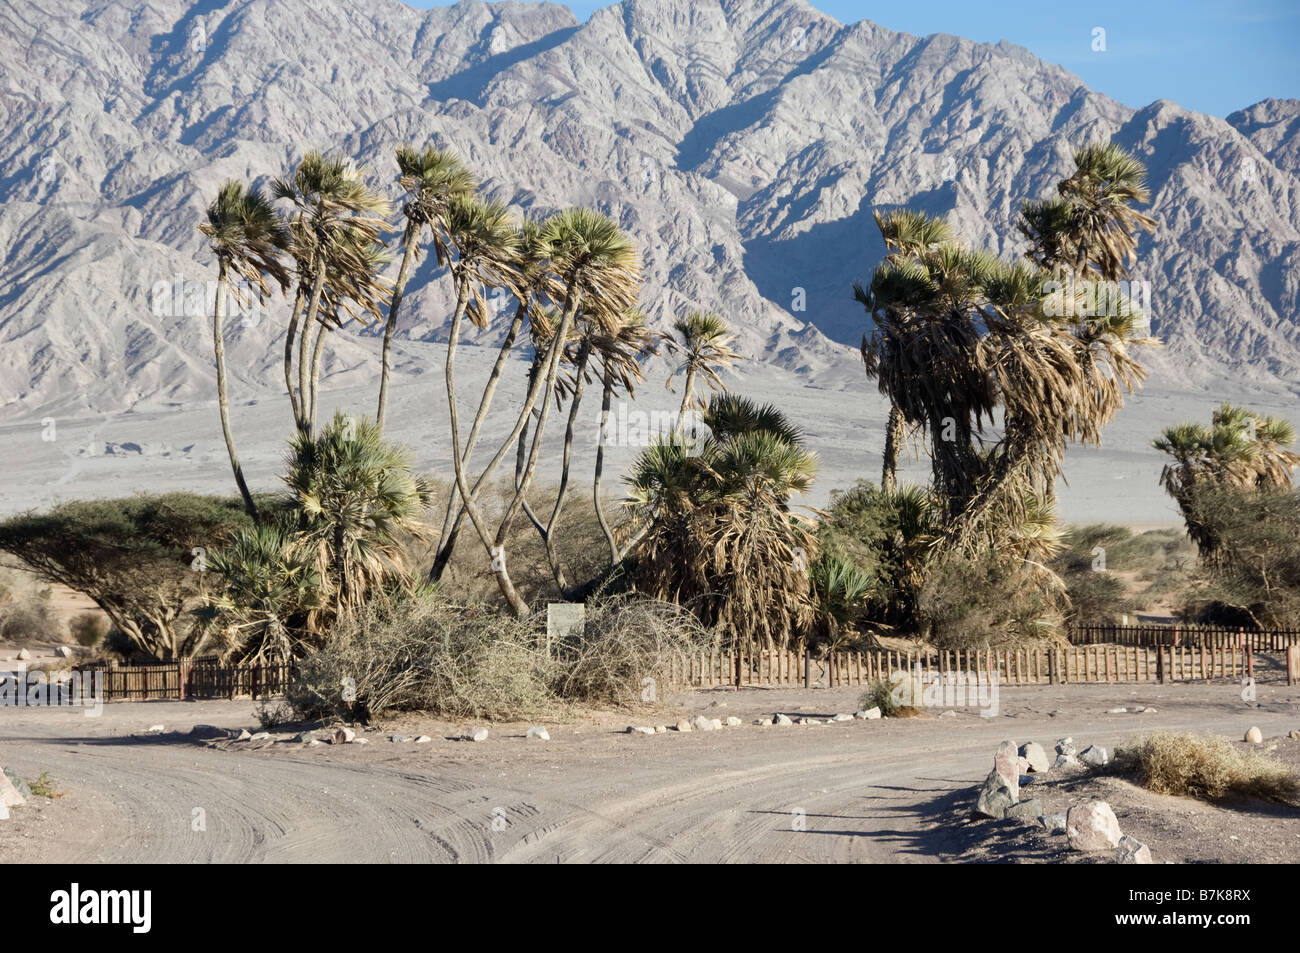 Doum Palms near Eilat Stock Photo